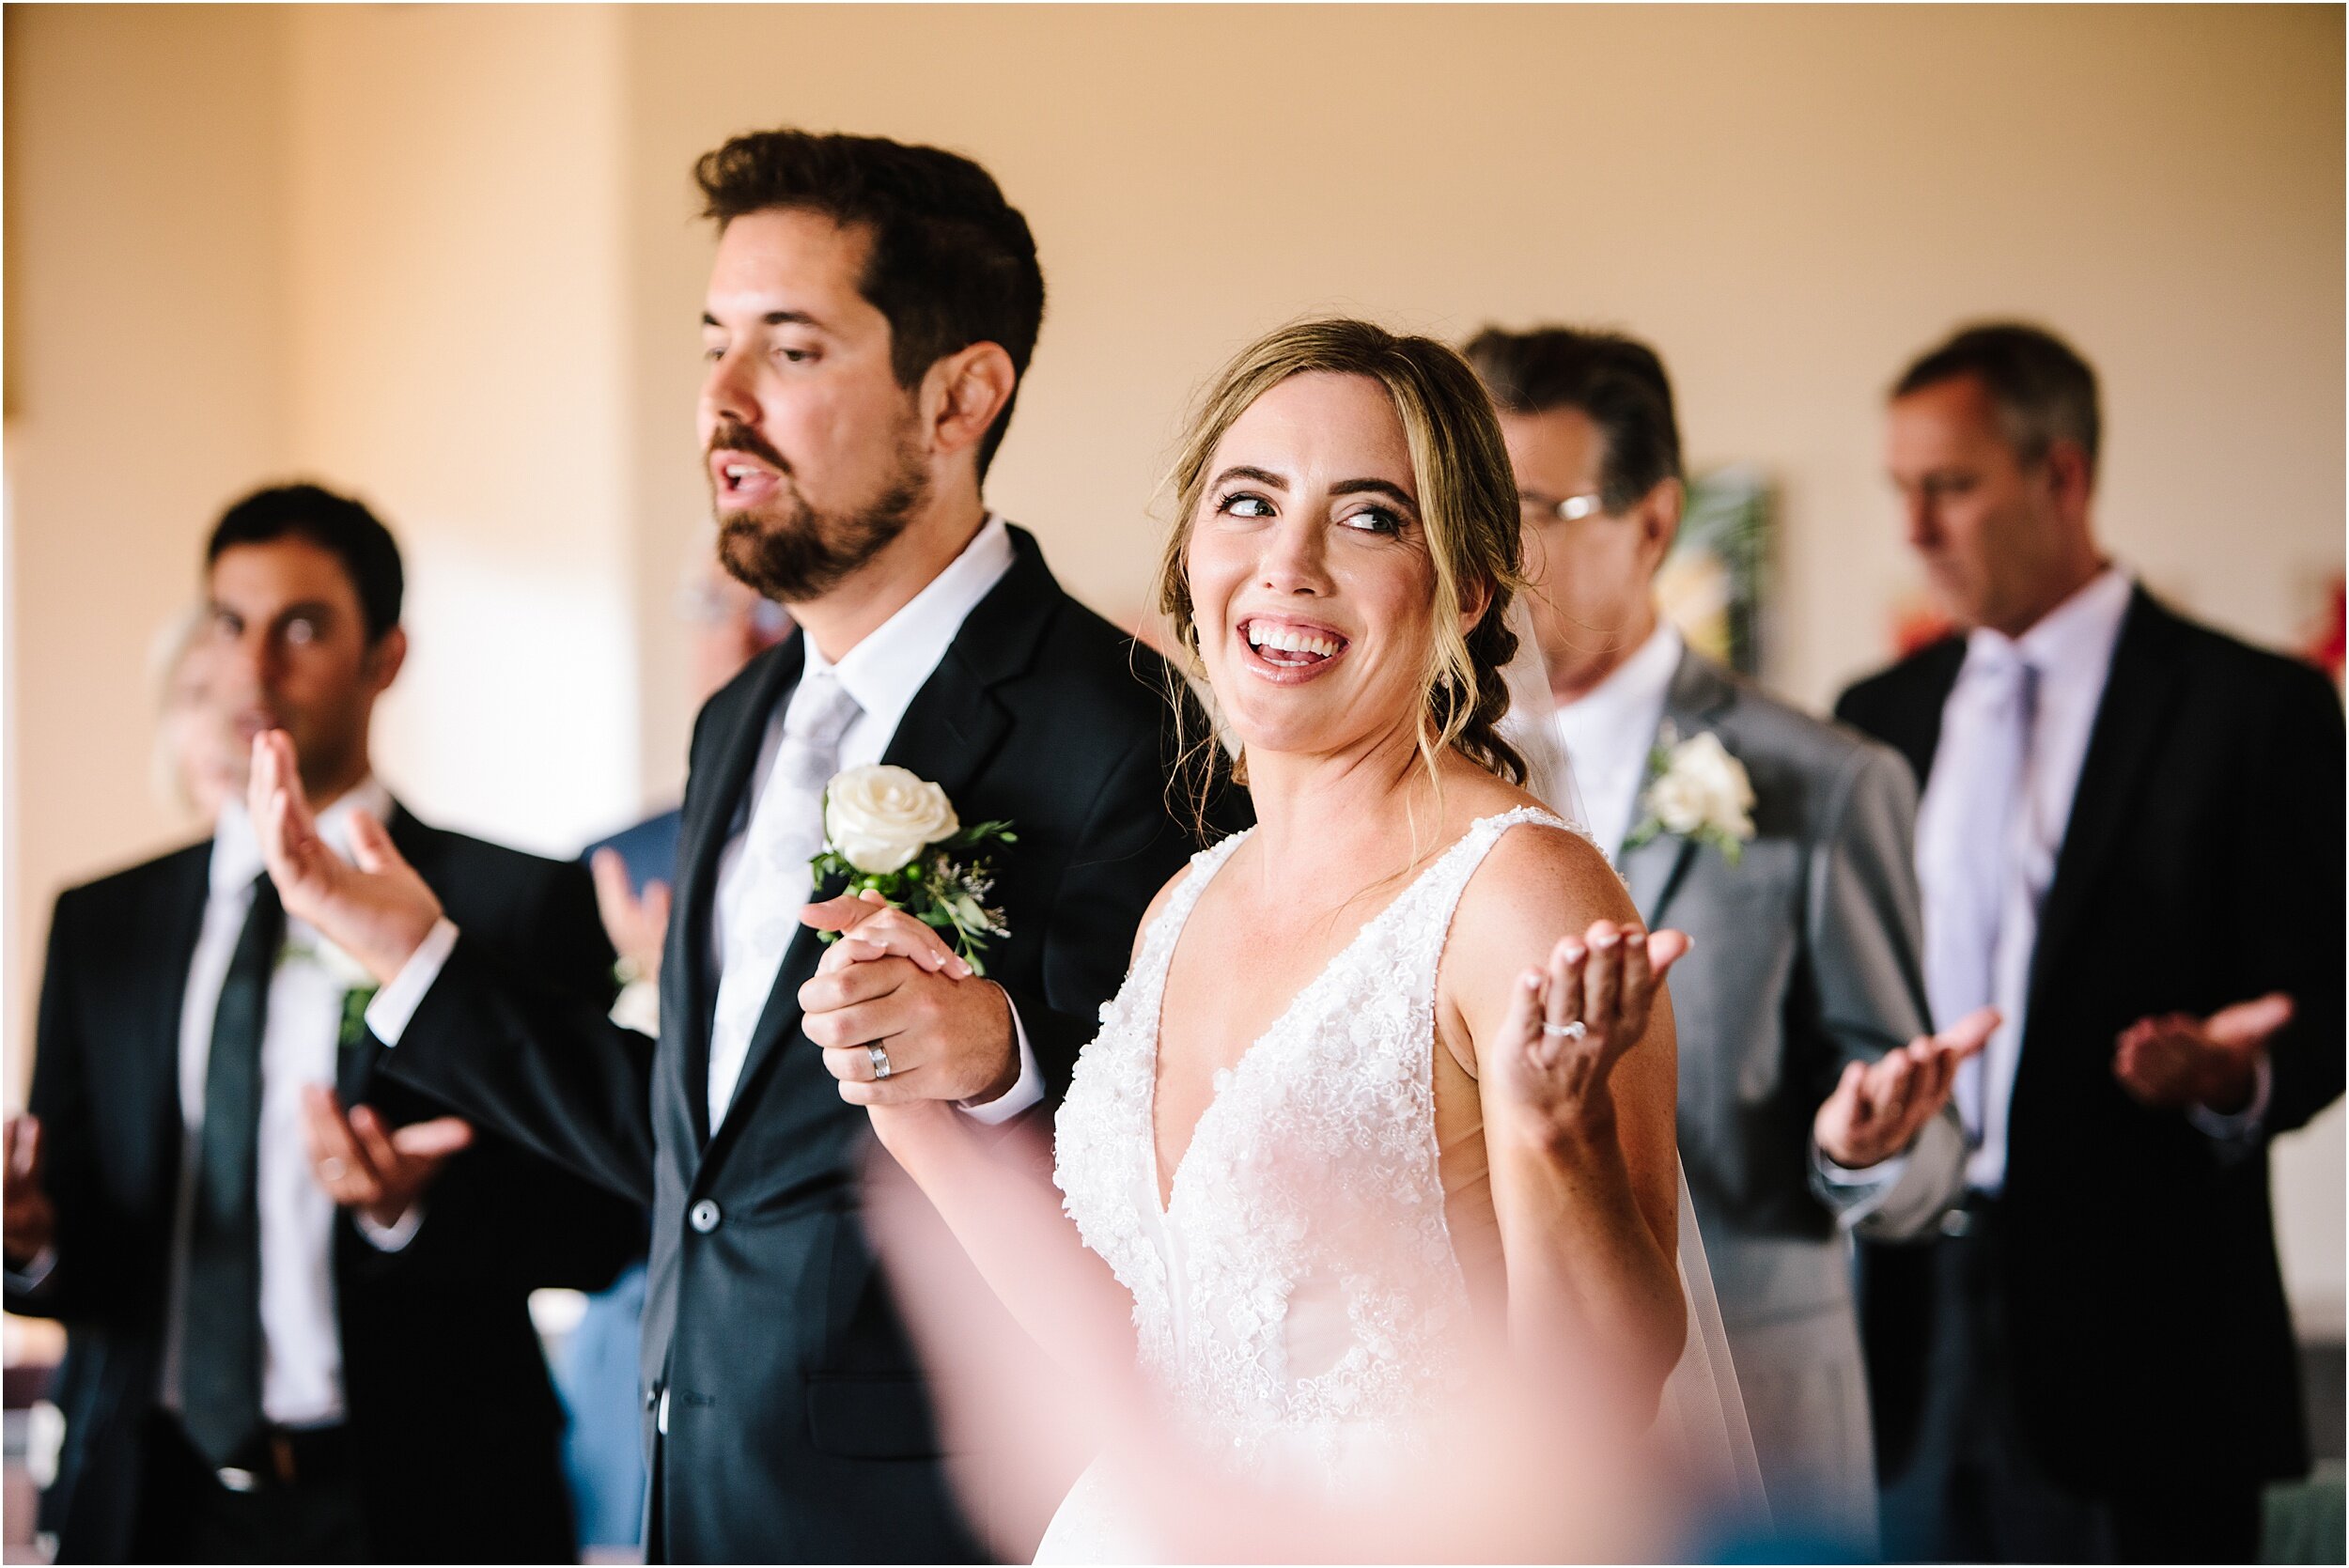 Caitlin and jason | Small Malibu Wedding | Malibu Elopement Photographer_0029.jpg